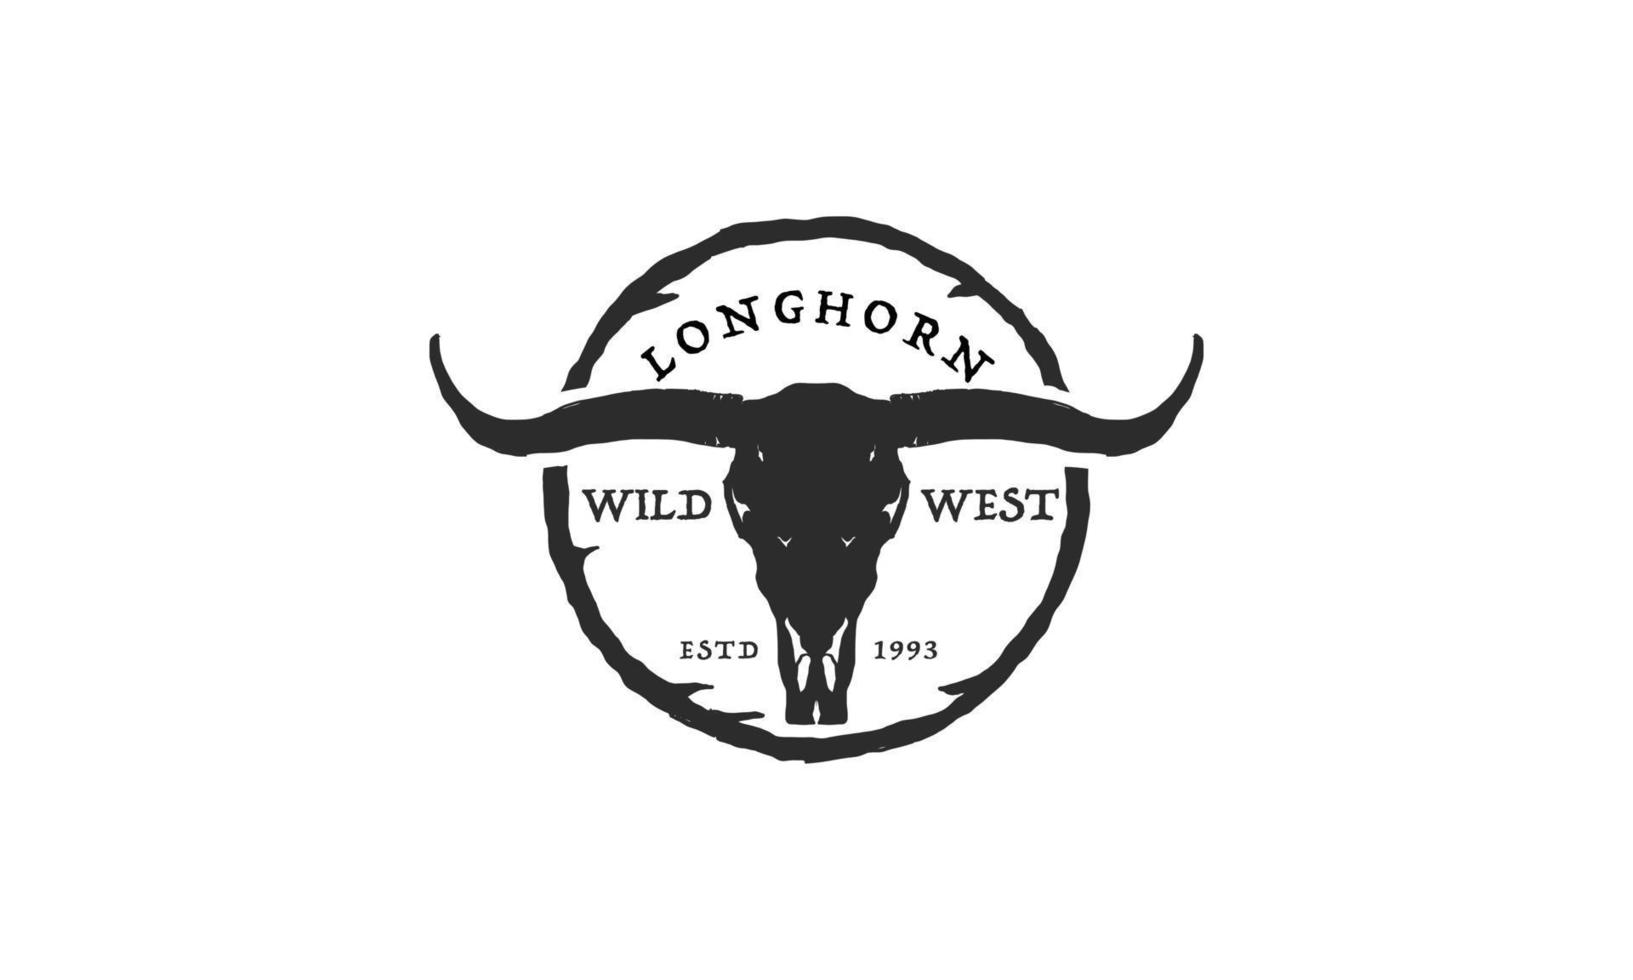 Texas Longhorn, Country Western Bull Cattle Vintage Label Logo Design vector